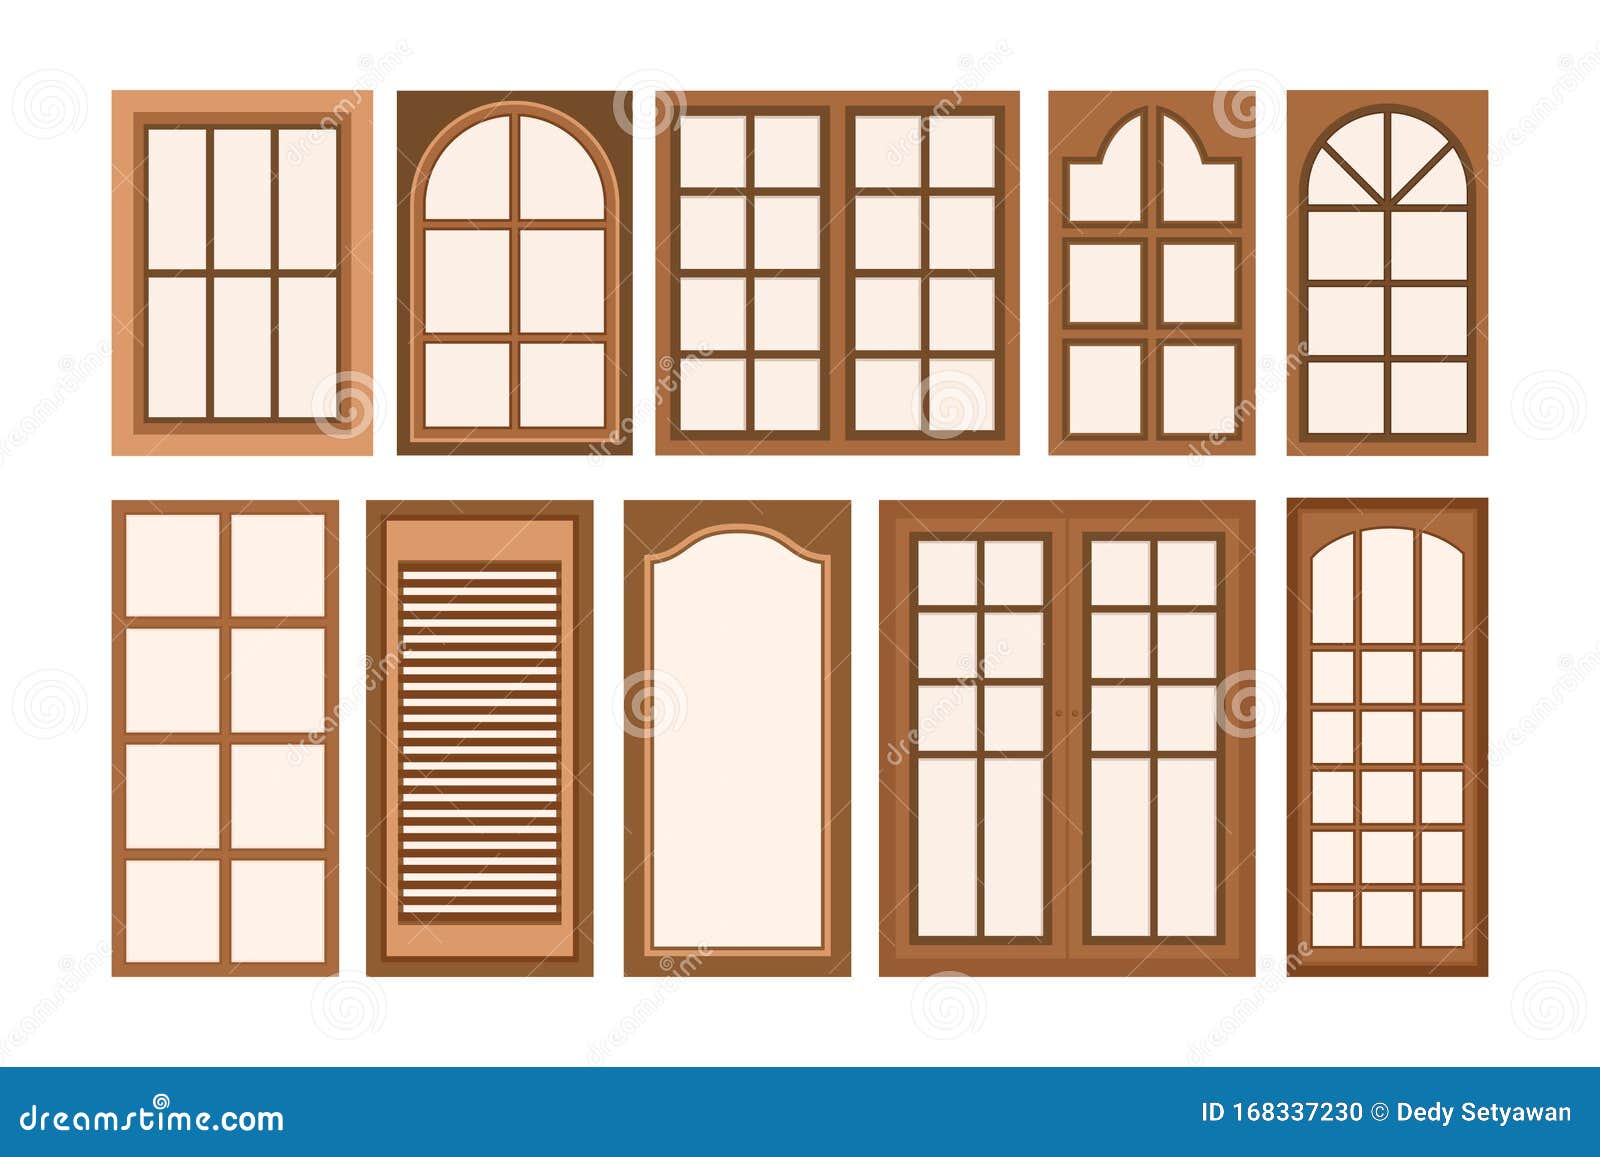 Vector Illustration of Wooden Window Stock Vector - Illustration of closed,  door: 168337230